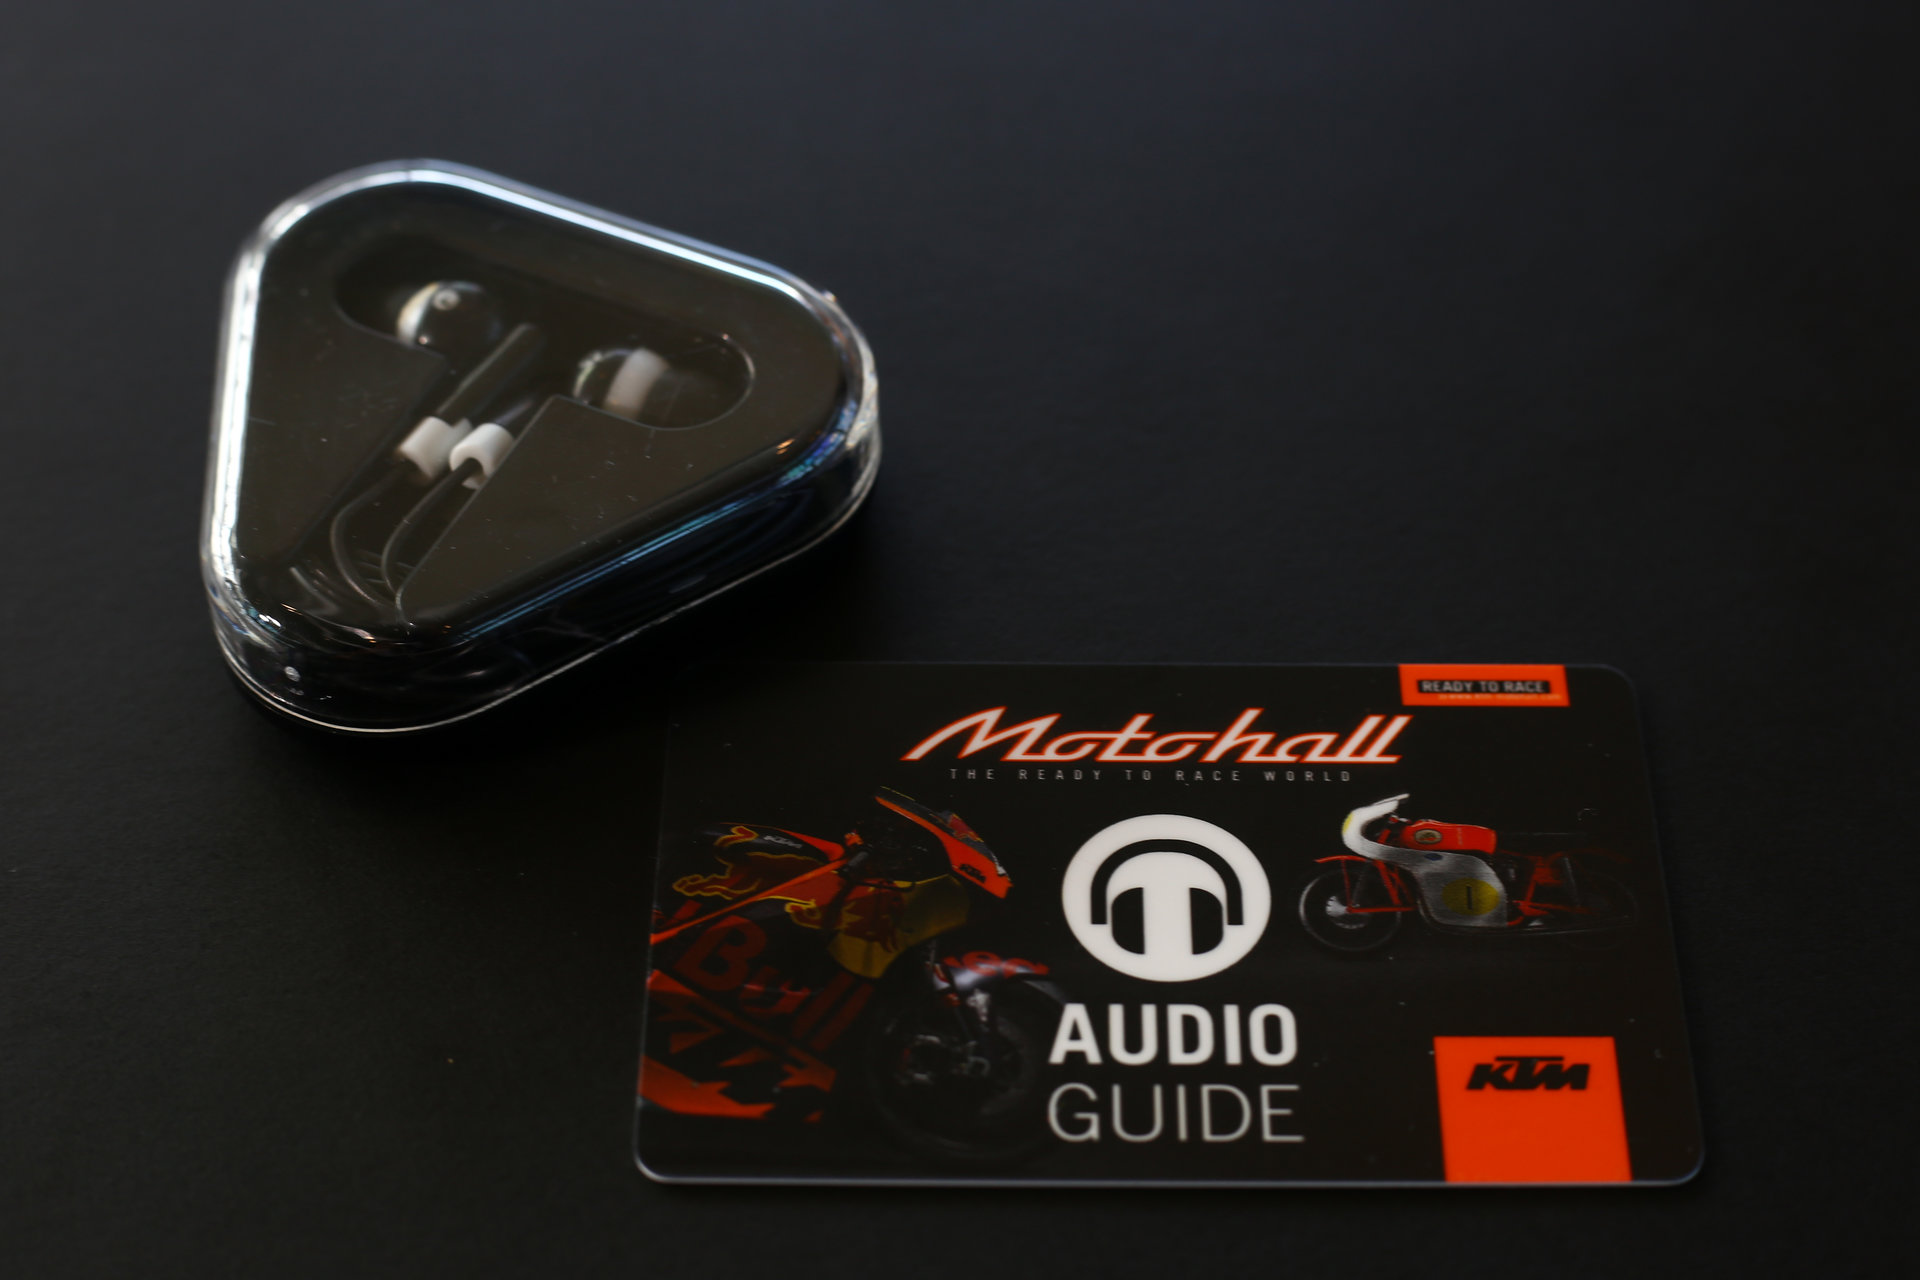  Referenz - KTM Motohall - Audioguide